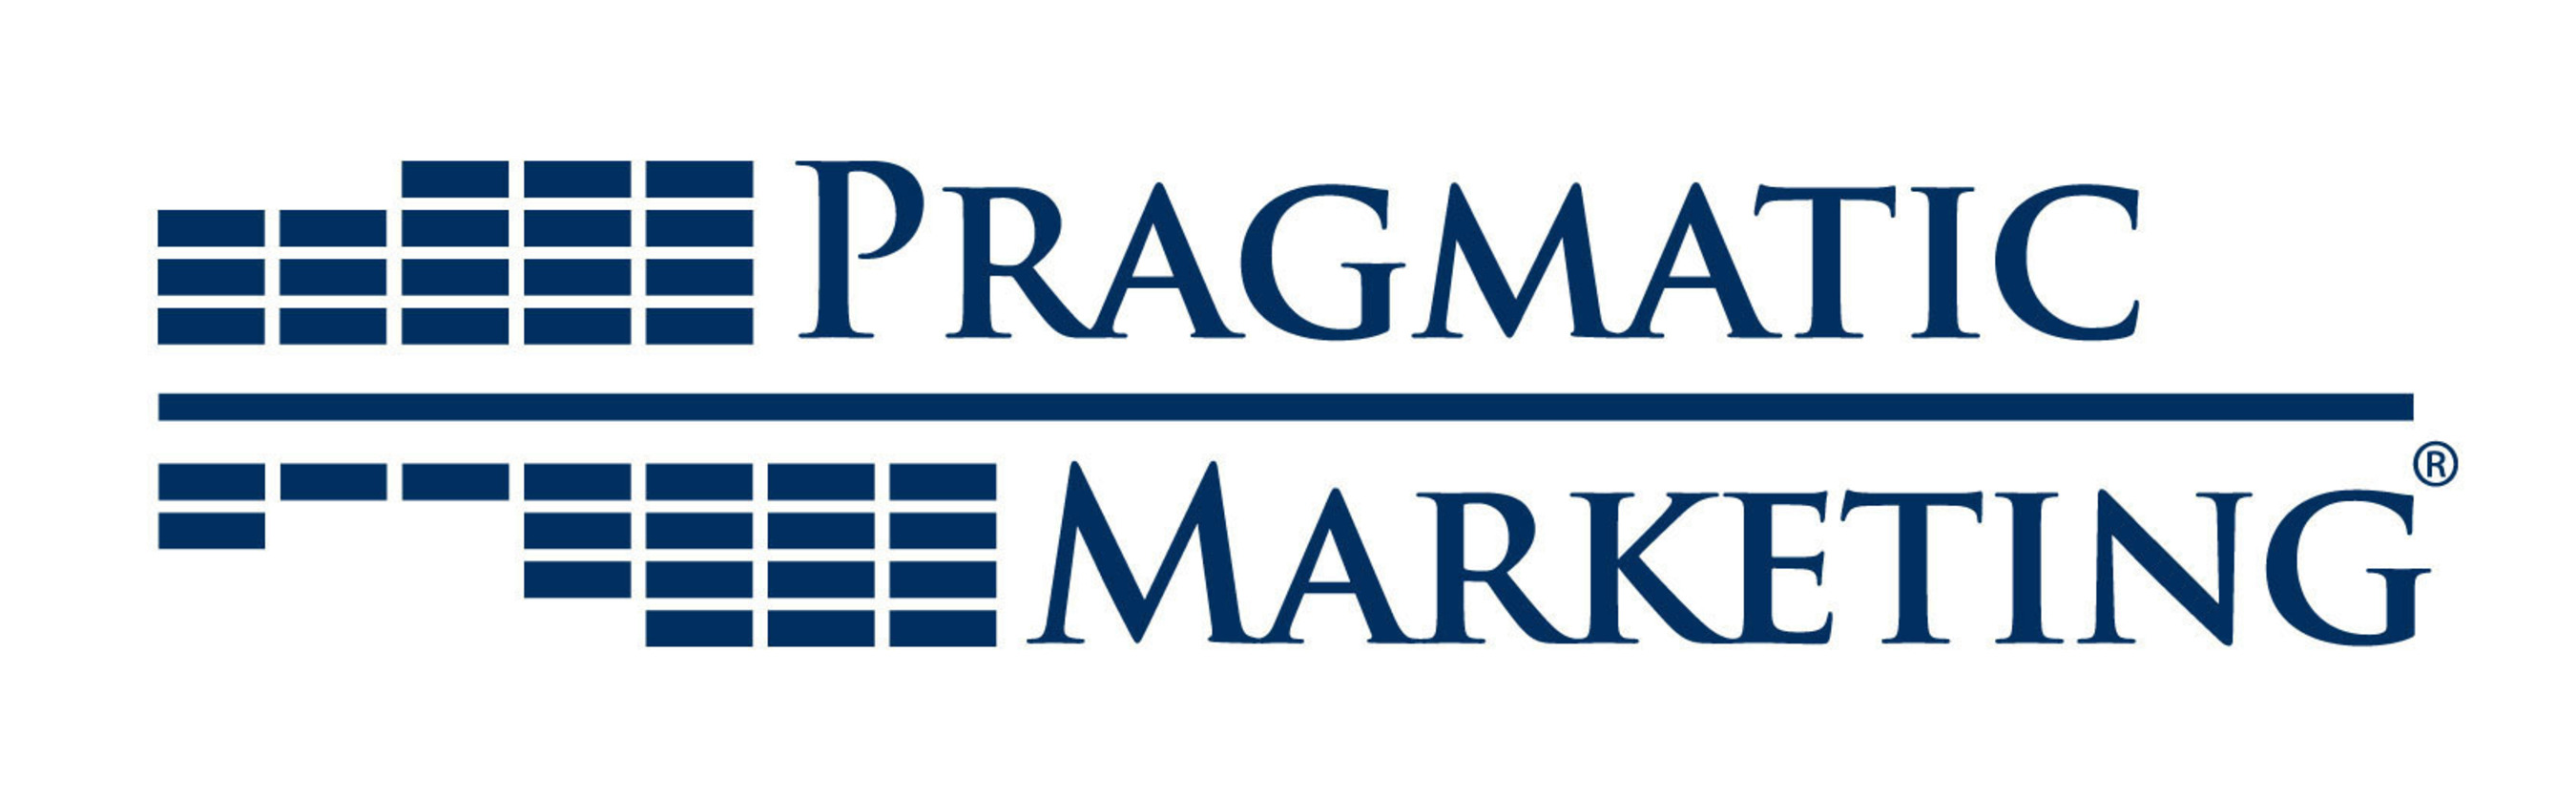 Pragmatic Marketing Logo